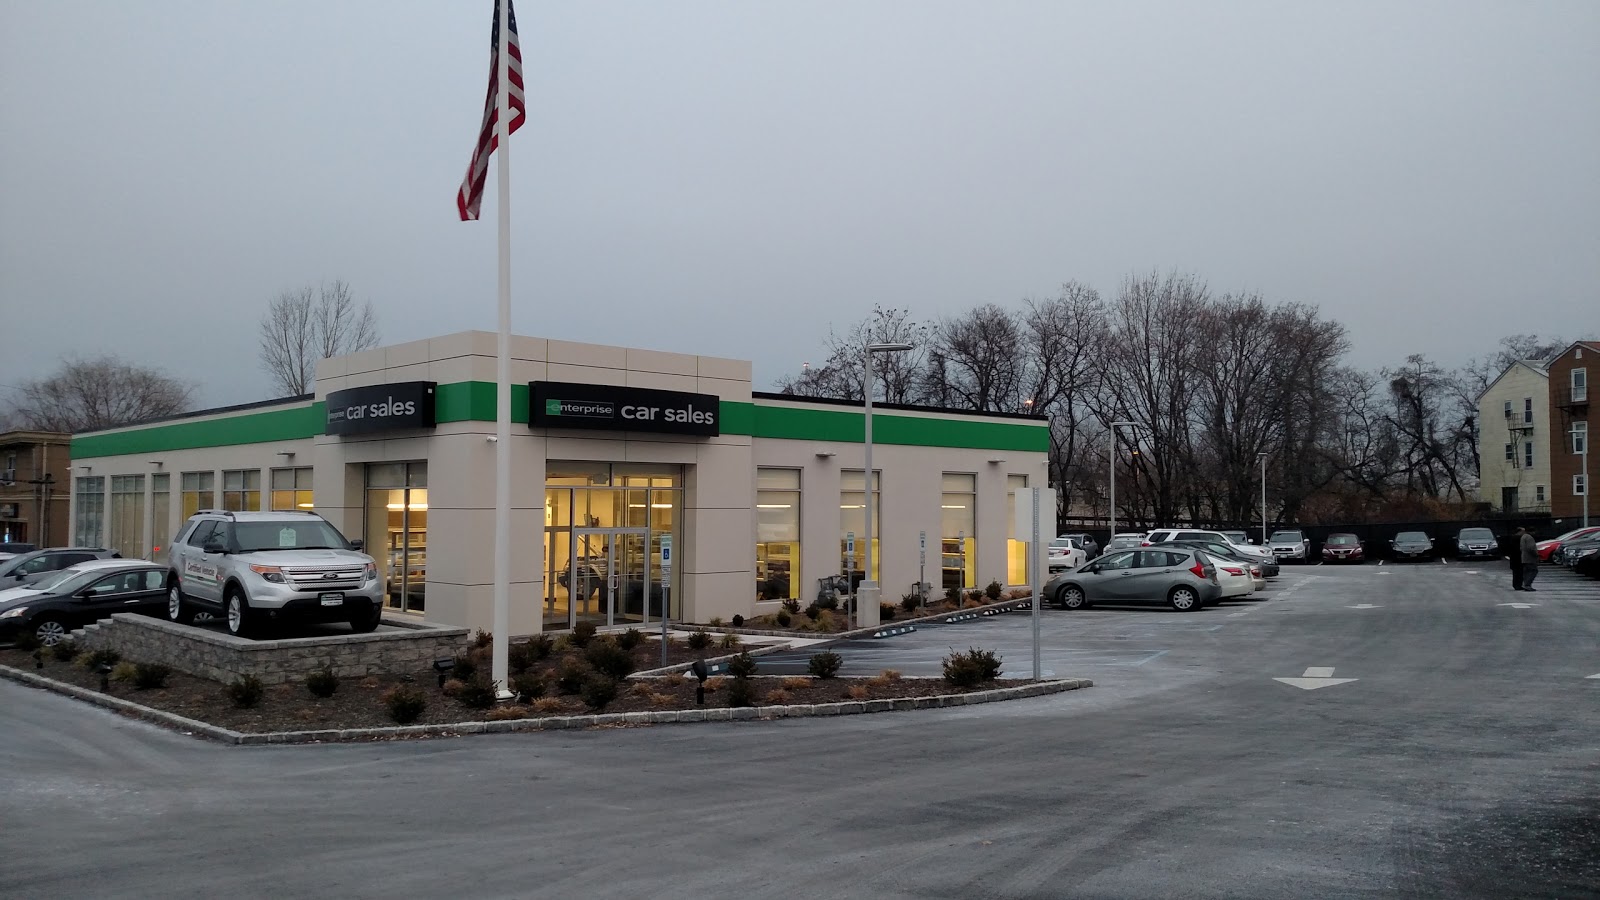 Photo of Enterprise Car Sales in Elmwood Park City, New Jersey, United States - 1 Picture of Point of interest, Establishment, Car dealer, Store